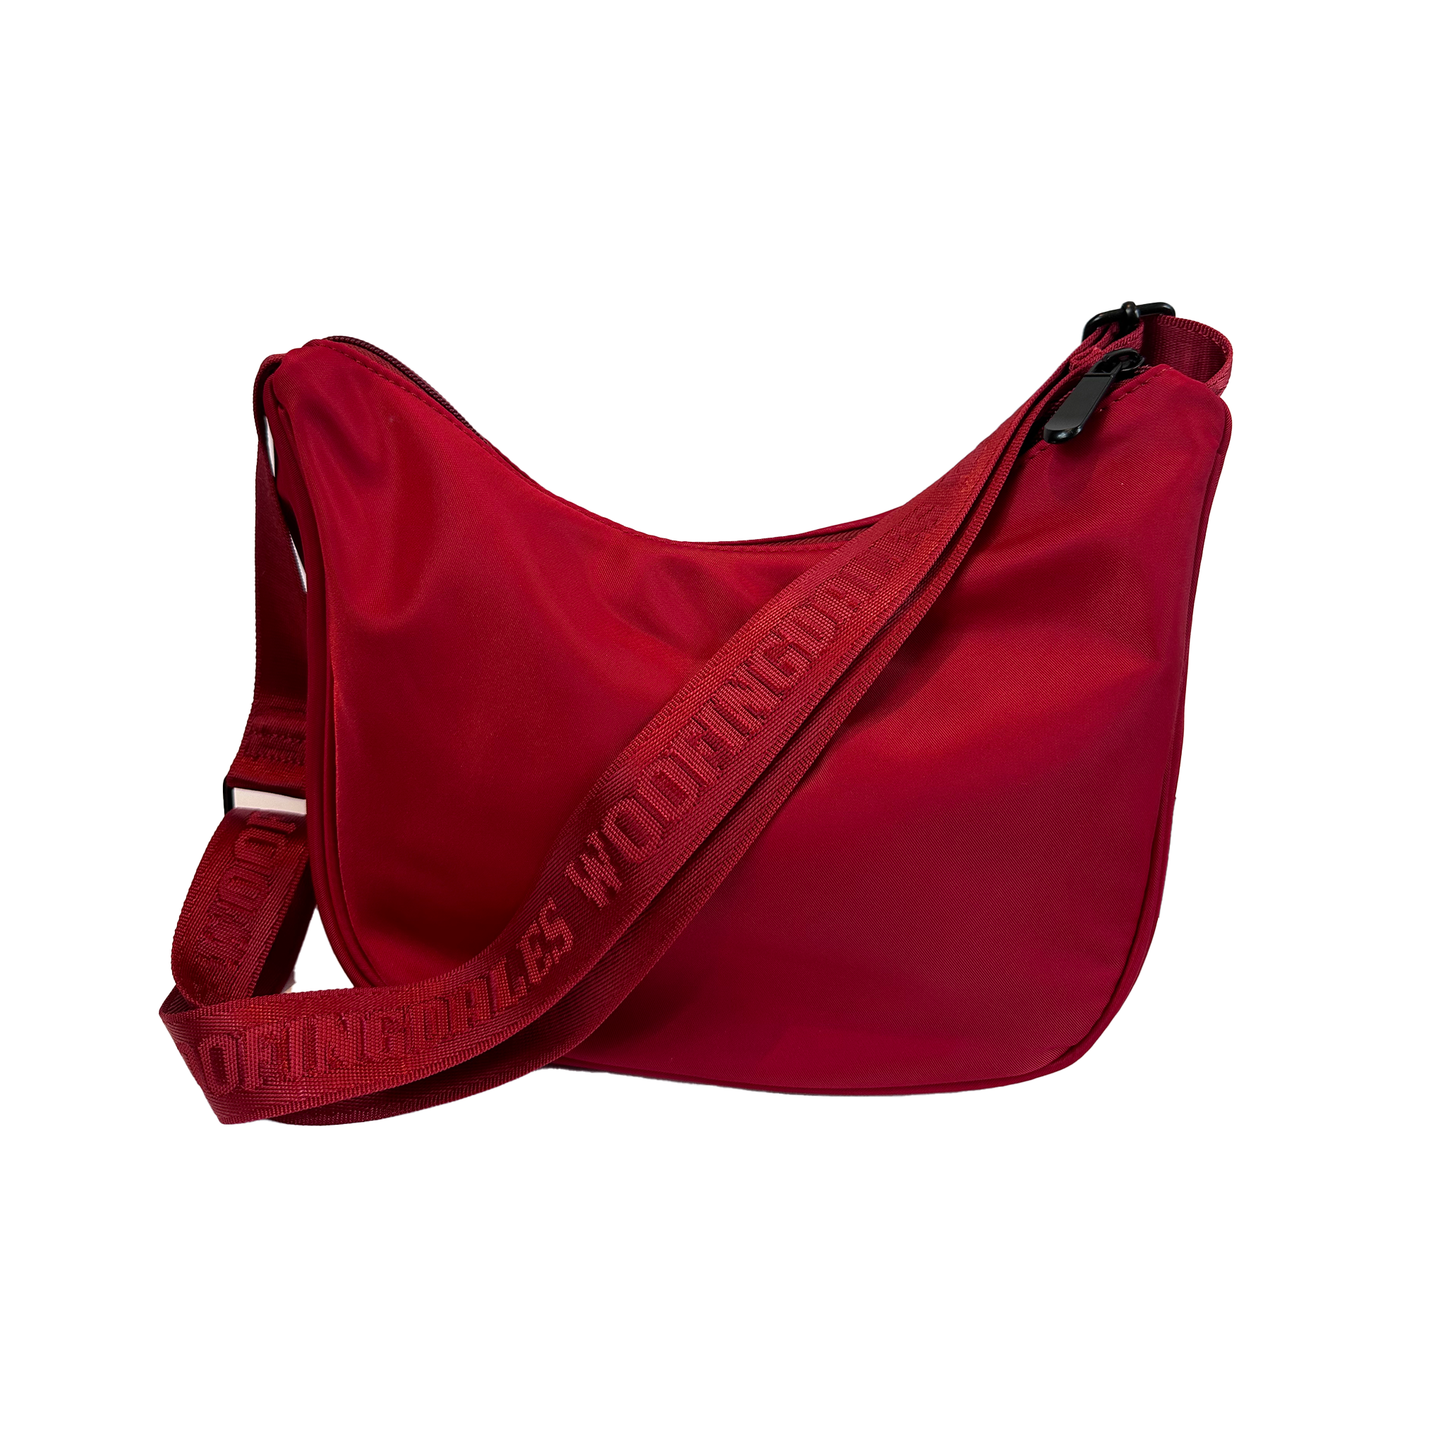 Image of Woofingdales Product - Walking Bag (Red)